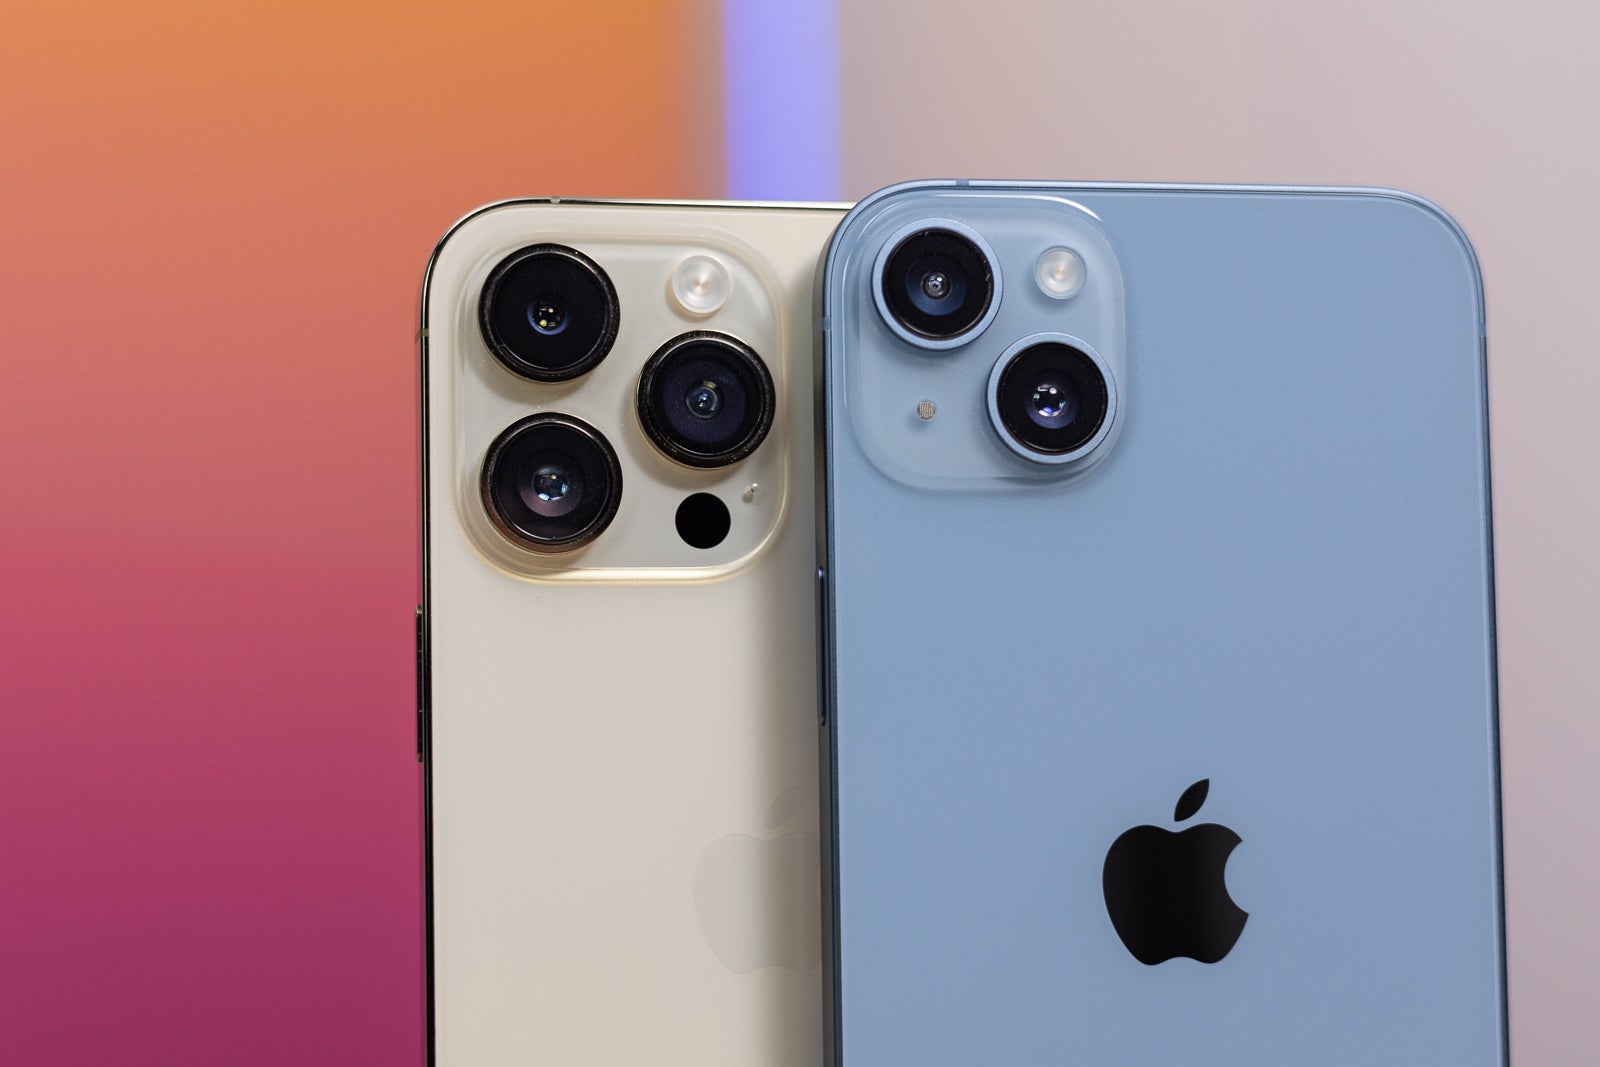 (Image Credit - Phonearena) iPhone 14 Pro Max vs iPhone 14 Plus - iPhone 14 Pro Max vs iPhone 14 Plus: ما هي الاختلافات وهل تستحق ذلك؟